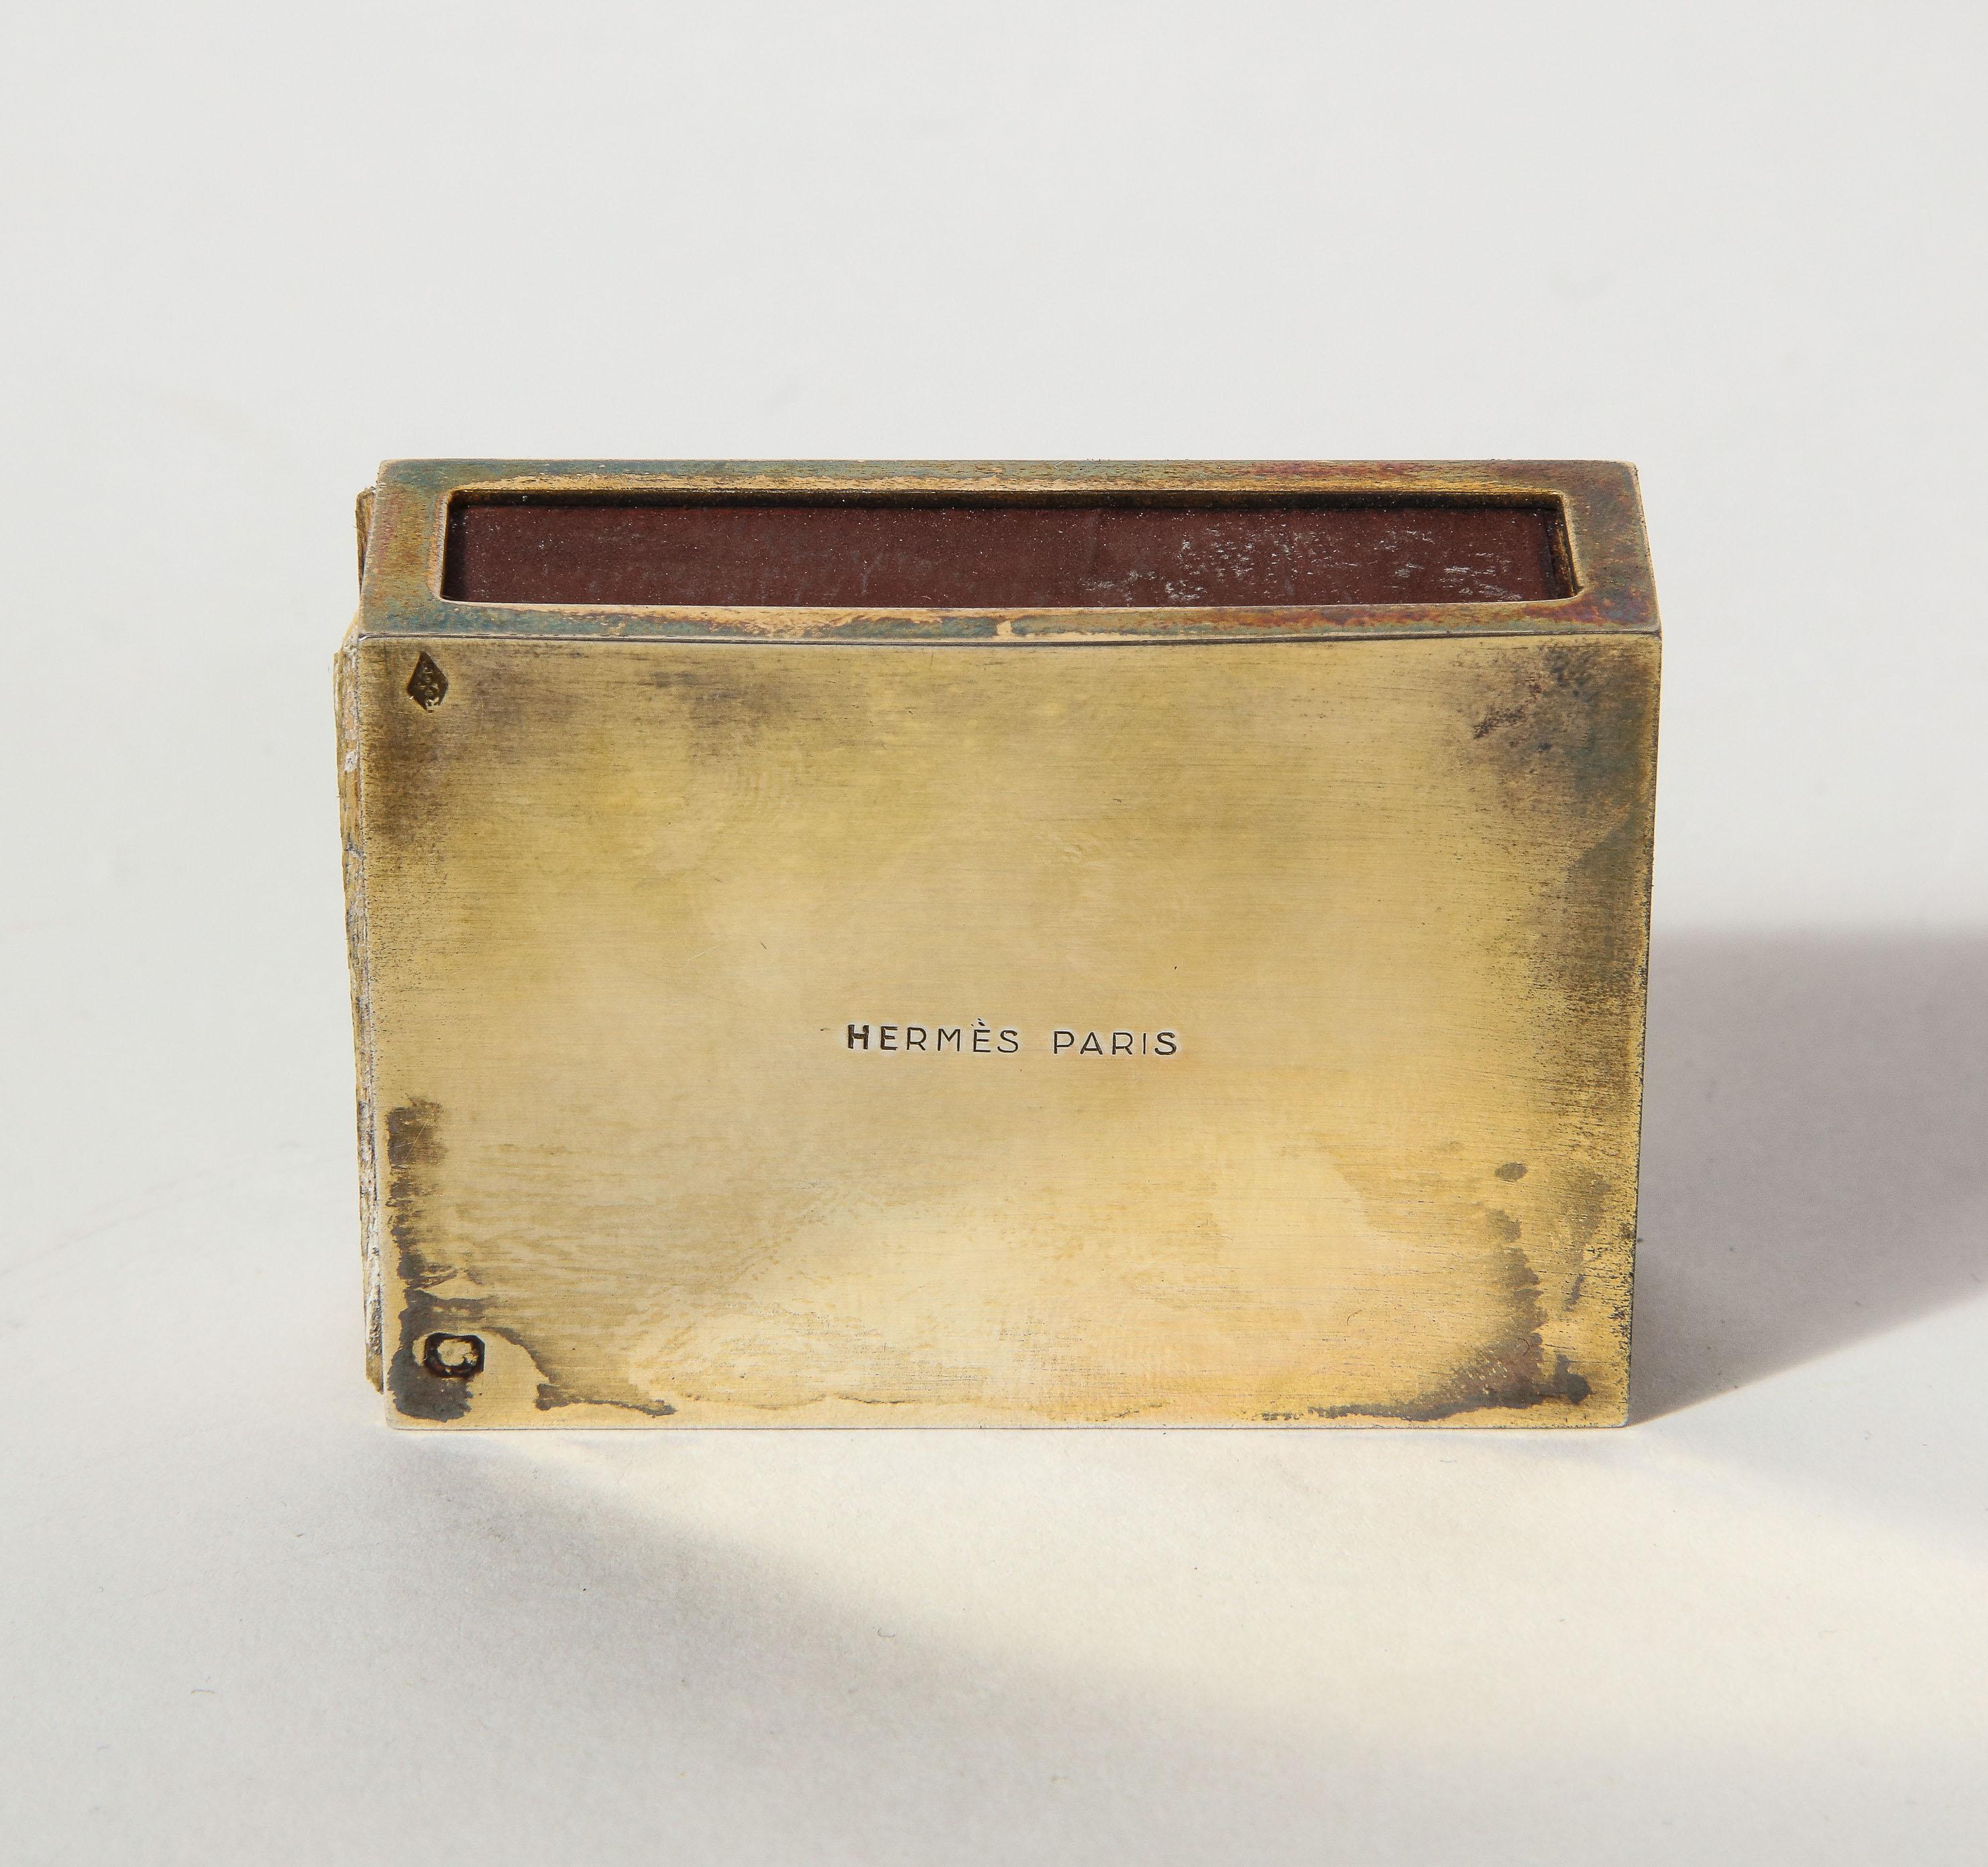 Hermes Paris & Ravinet d'Enfert, a Rare French Silver-Gilt Smoking Set 10